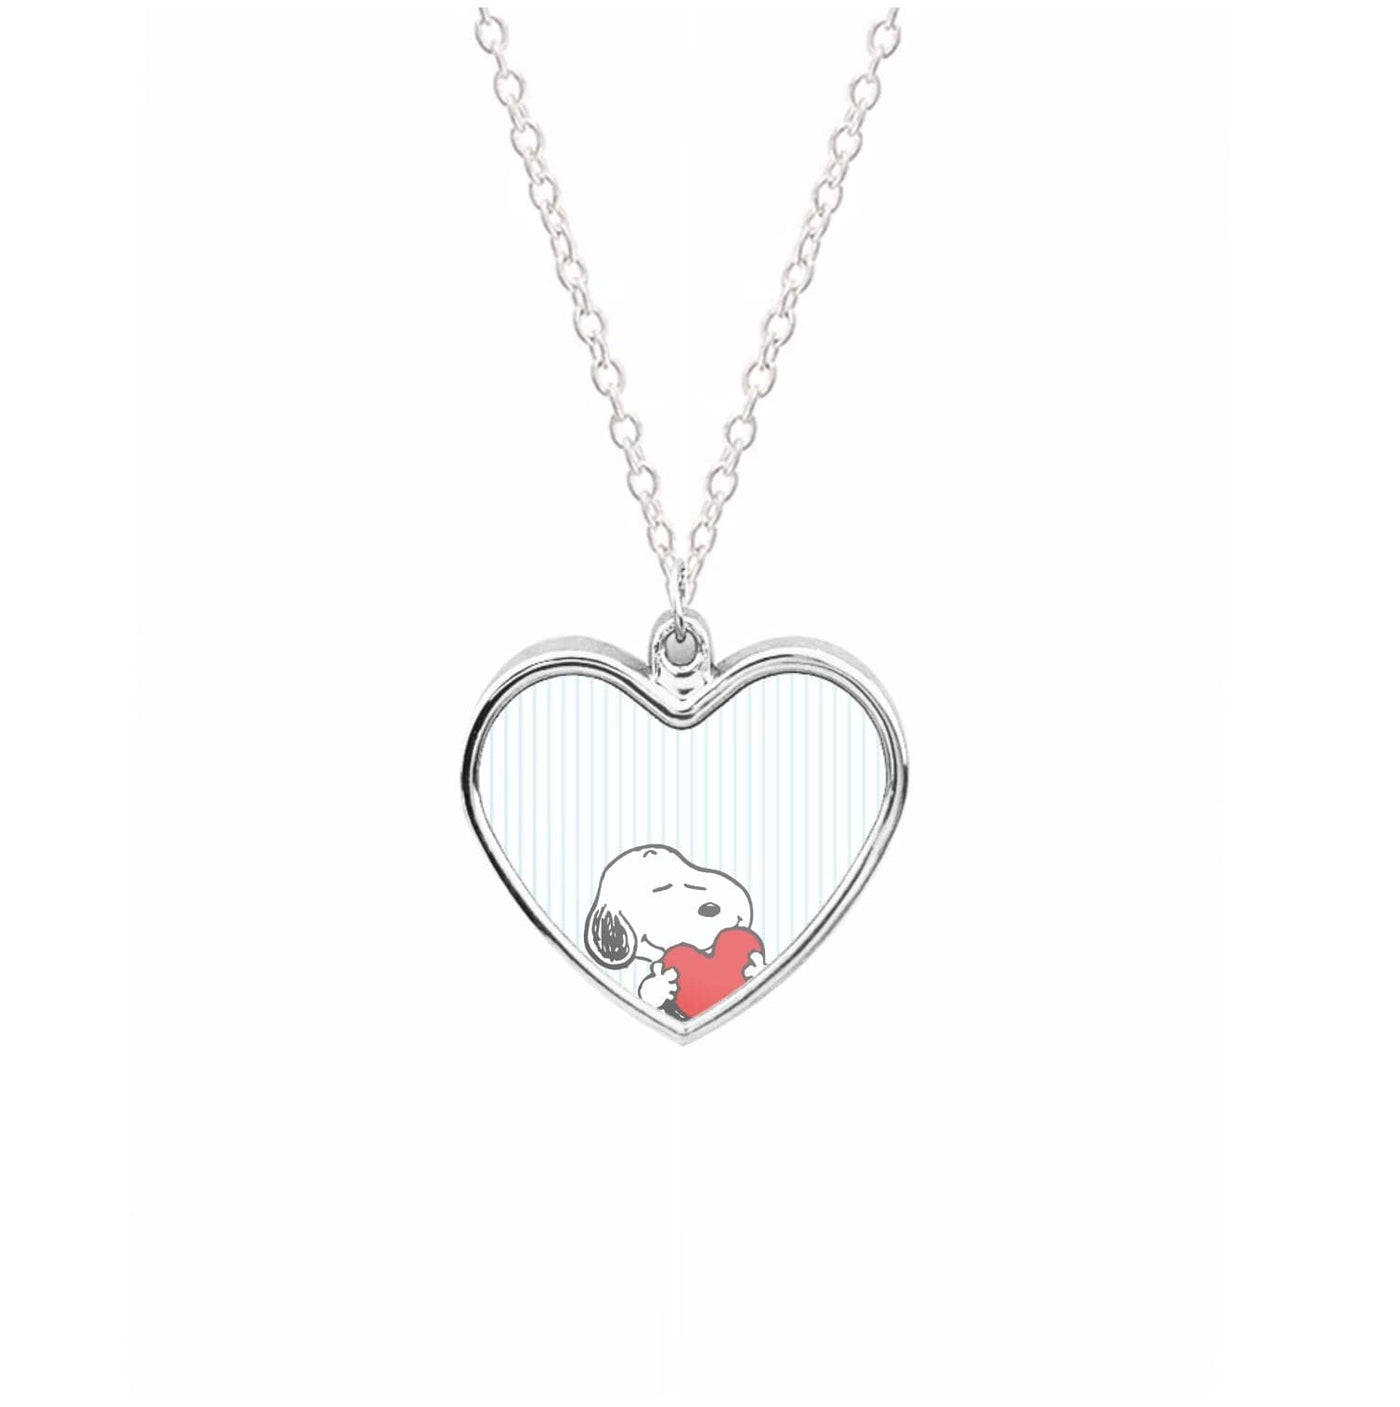 Snoopy - Valentine's Day Necklace